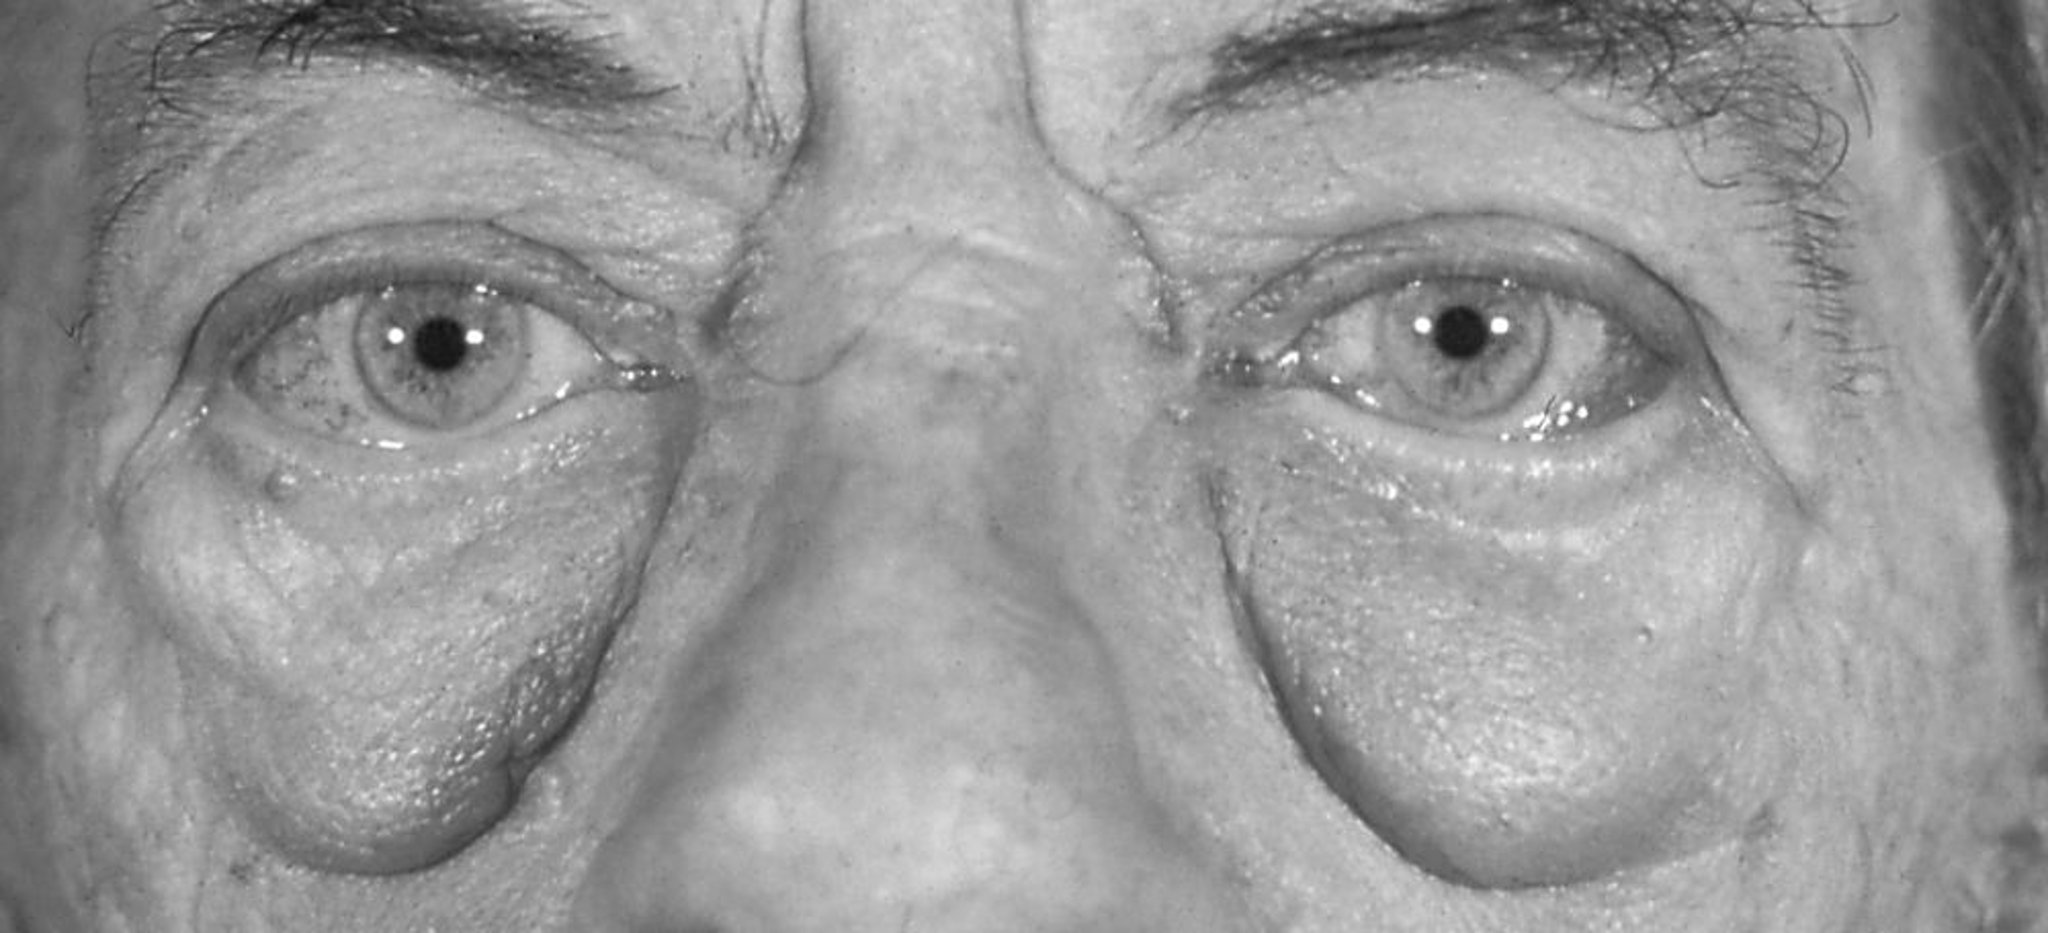 Geschwollene Augen bei Basedow-Krankheit